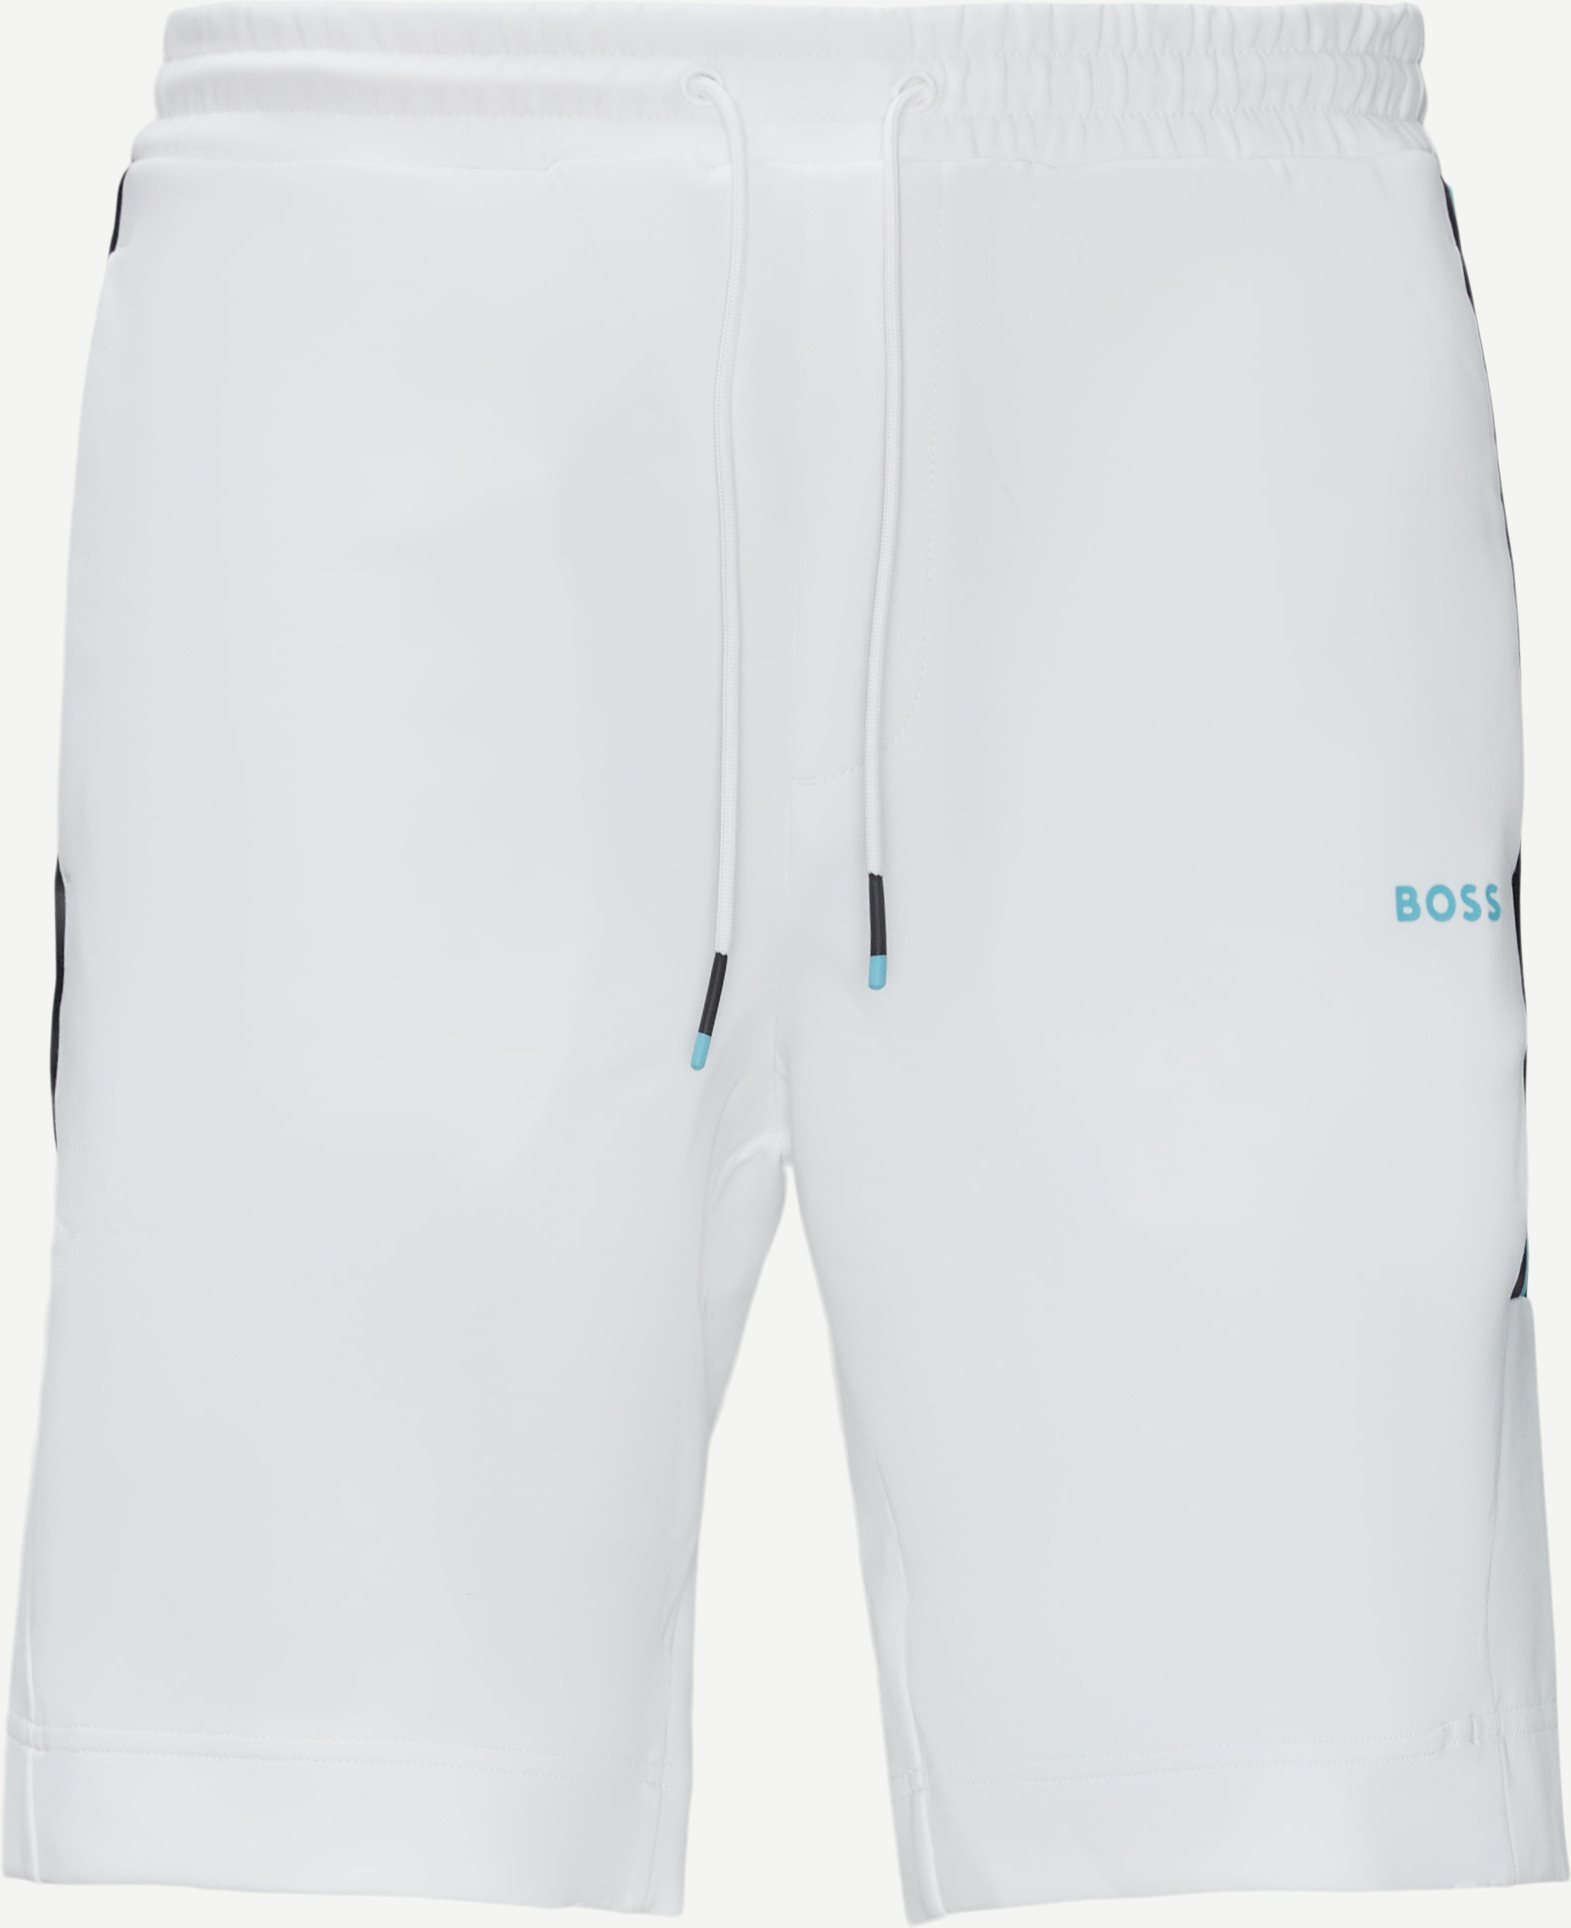 Shorts - Regular fit - White